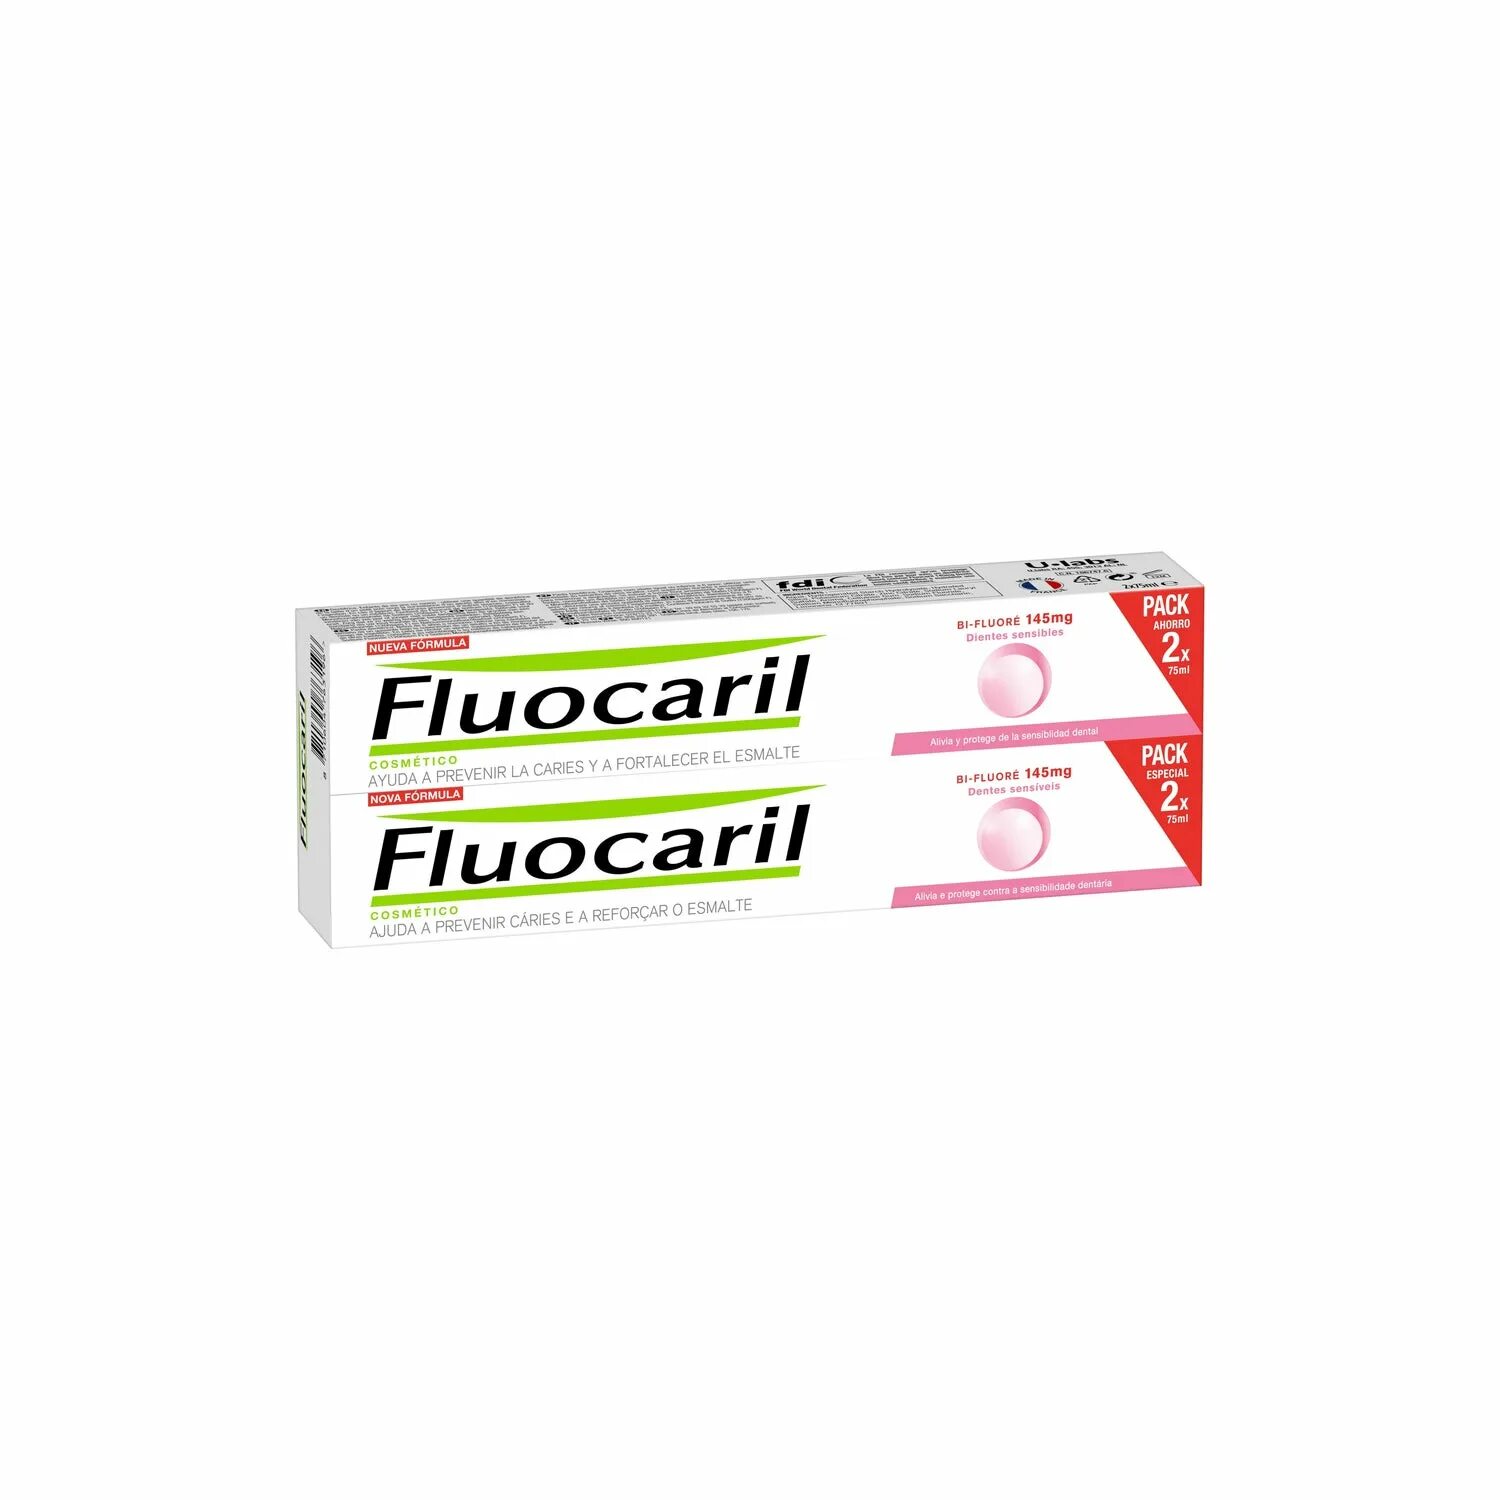 Пасто 2. Зубная паста Fluocaril bi-fluore 145mg. Fluocaril зубная паста ppm 1200. Зубная паста Fluocaril 160. Набор зубных паст Fluocaril bi-145 White 75 мл + 75 мл.